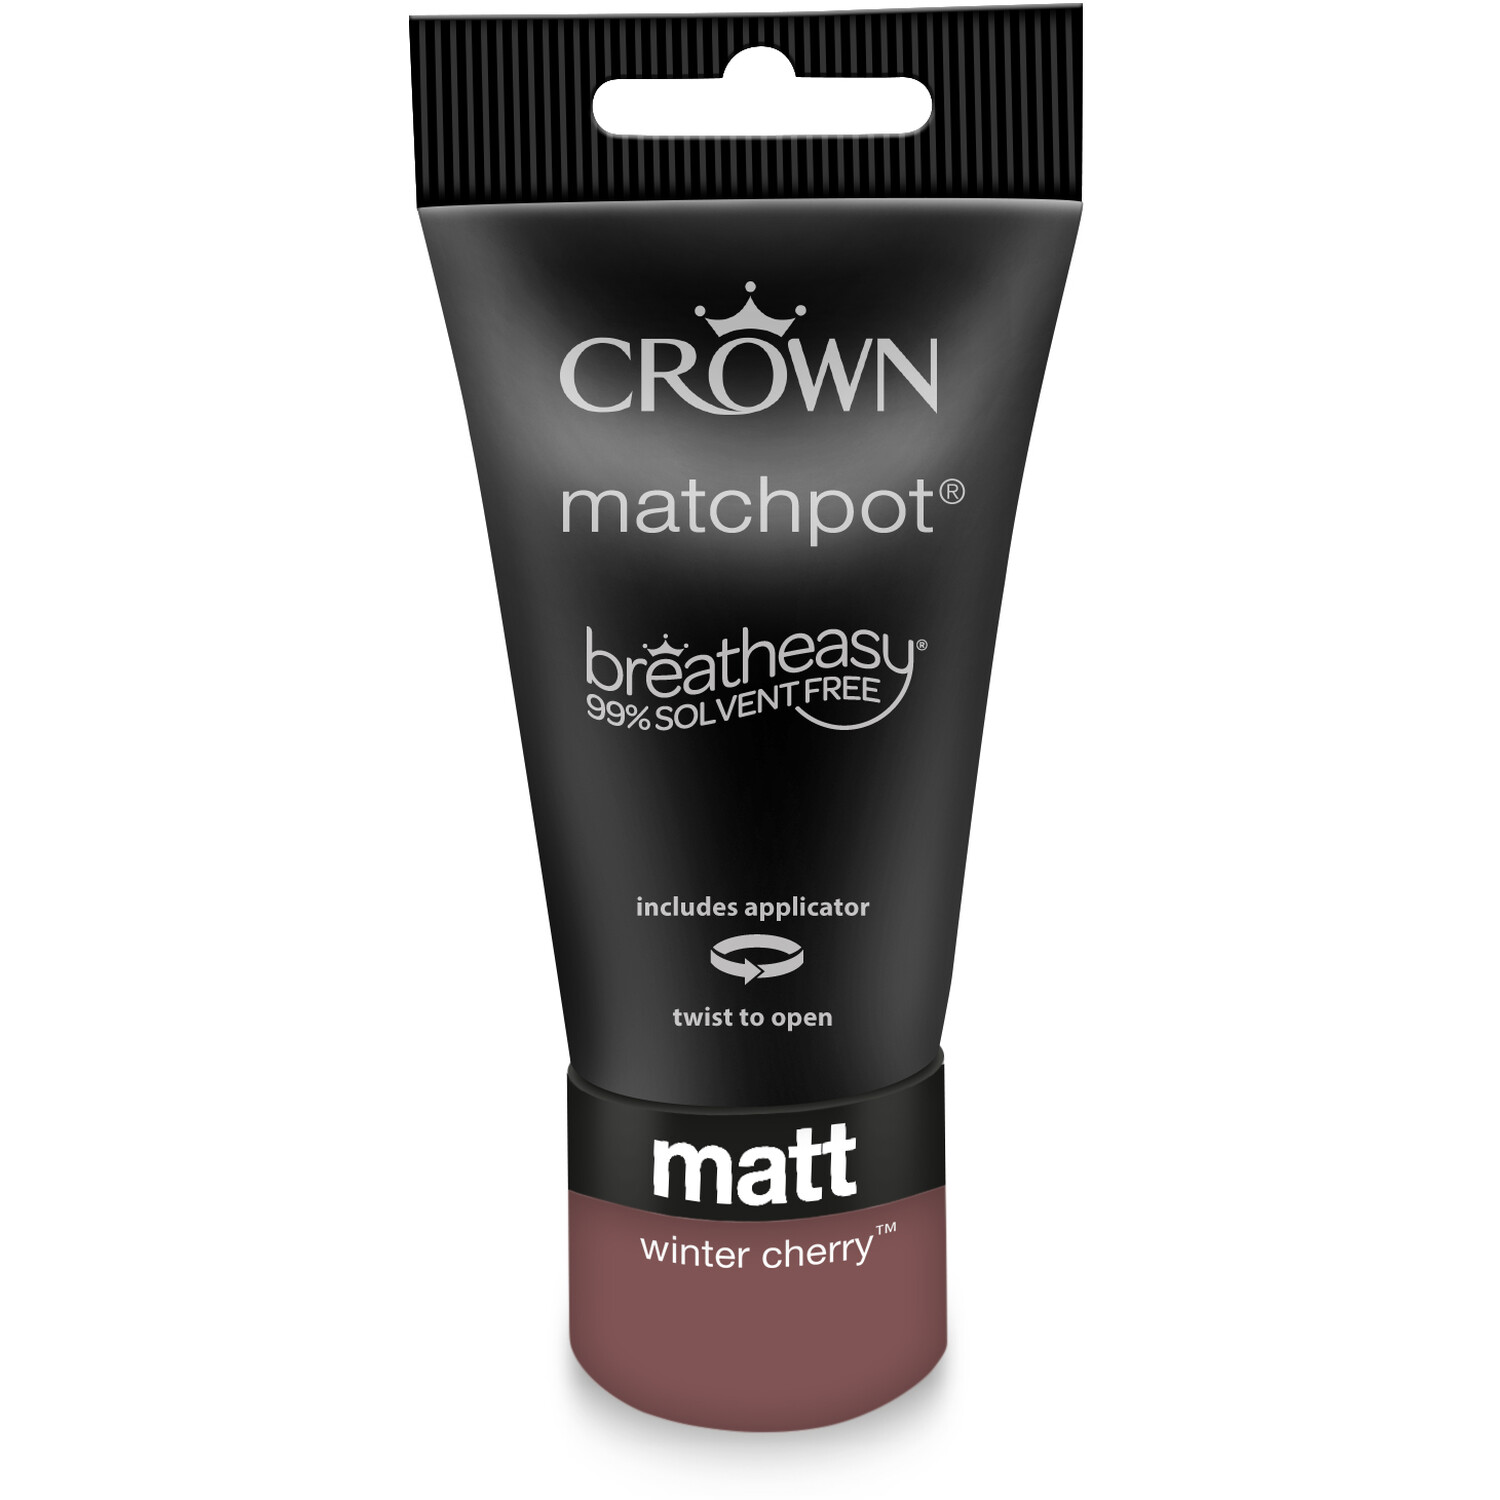 Crown Breatheasy Winter Cherry Matt Feature Wall Tester Pot 40ml Image